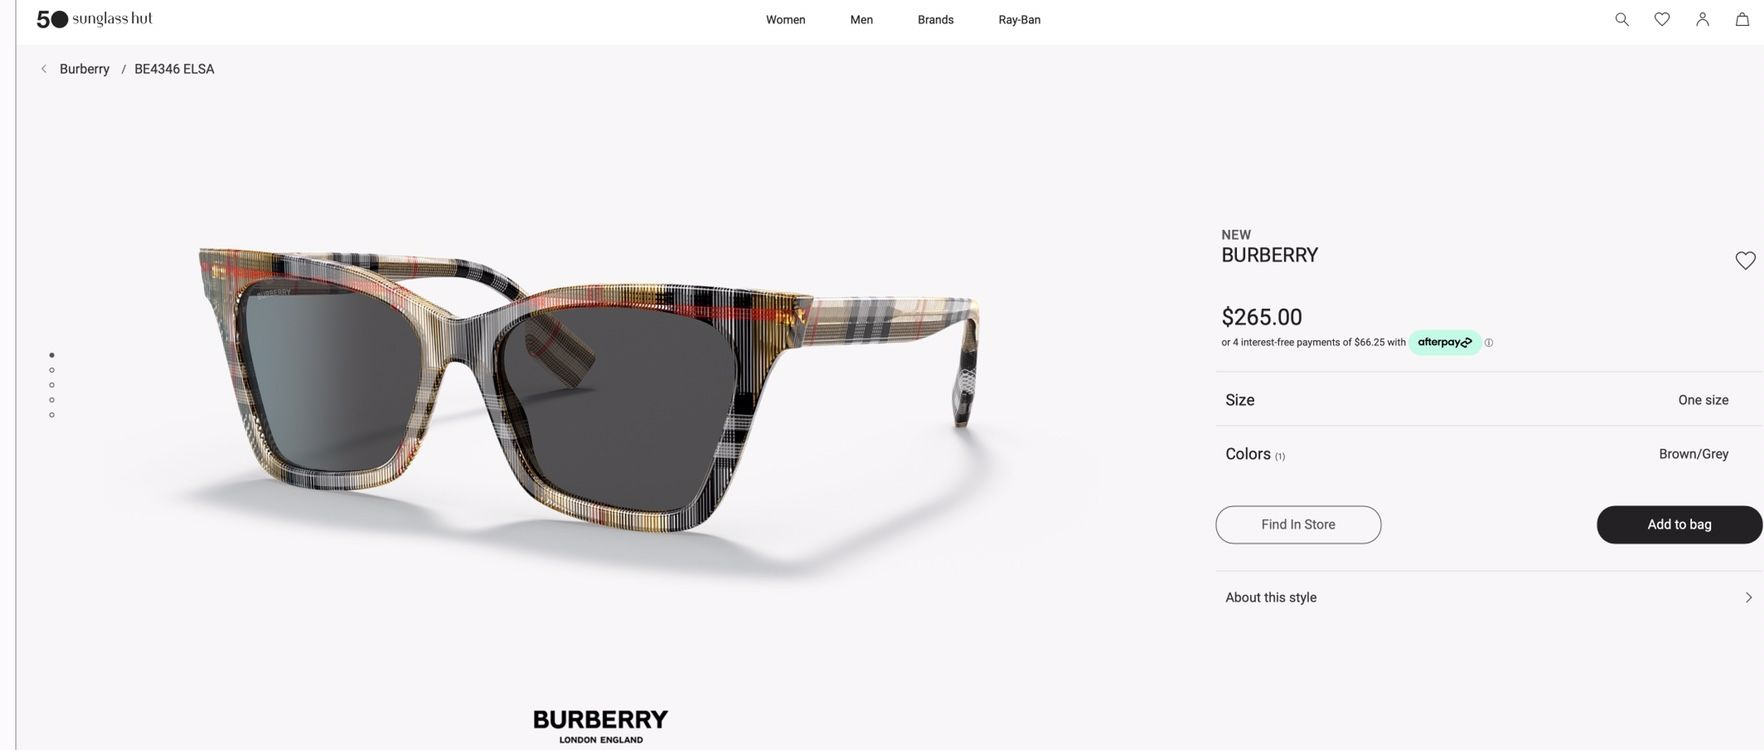 Burberry sunglasses new